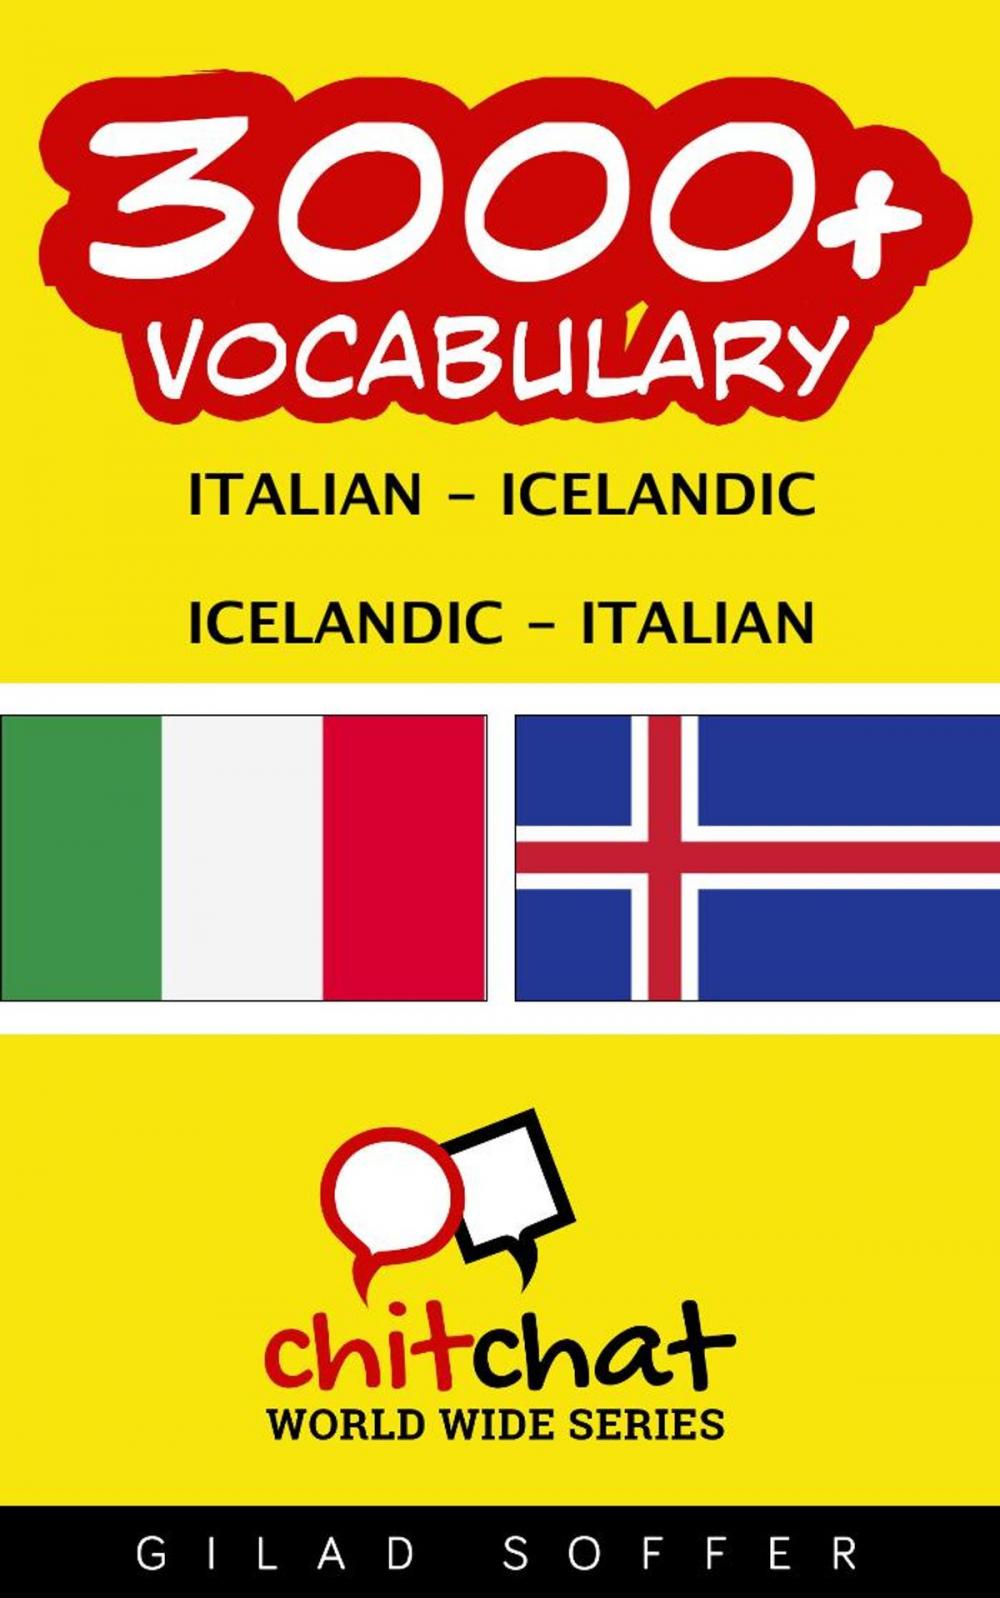 Big bigCover of 3000+ Vocabulary Italian - Icelandic